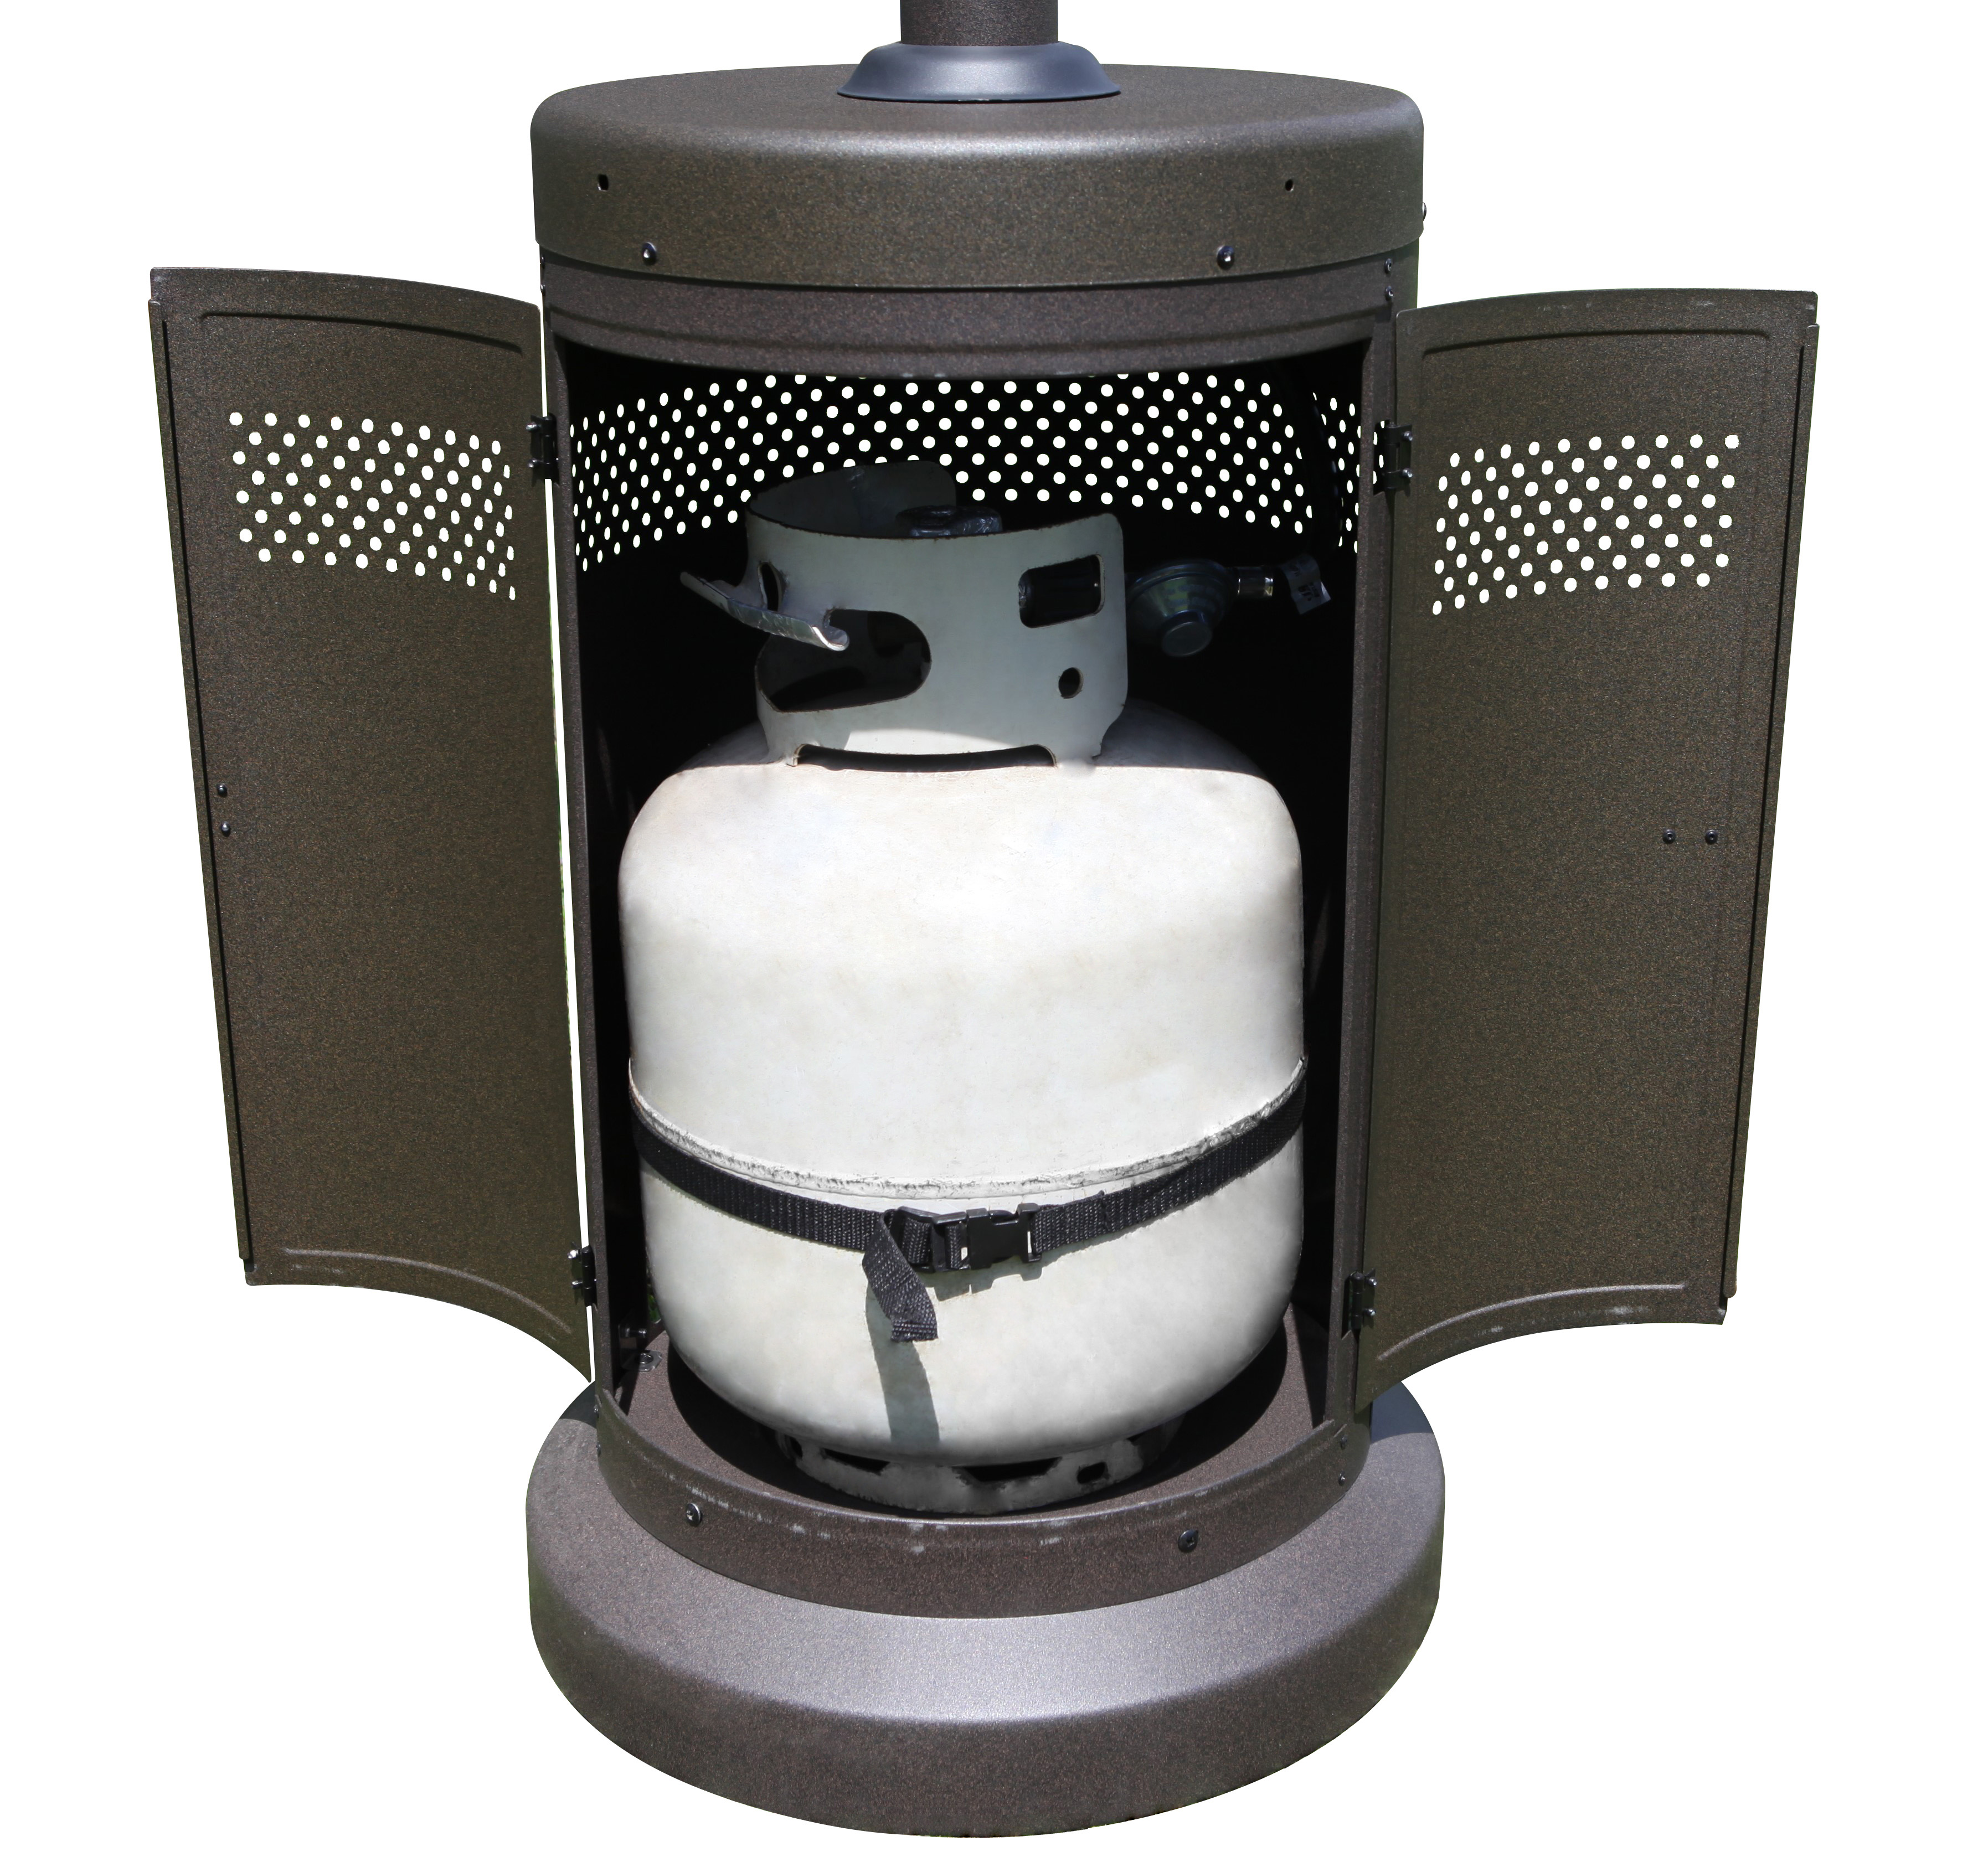 Mainstays 48,000 BTU Propane Gas Outdoor Freestanding Patio Heater , Brown Powder Coat Finish - image 5 of 6